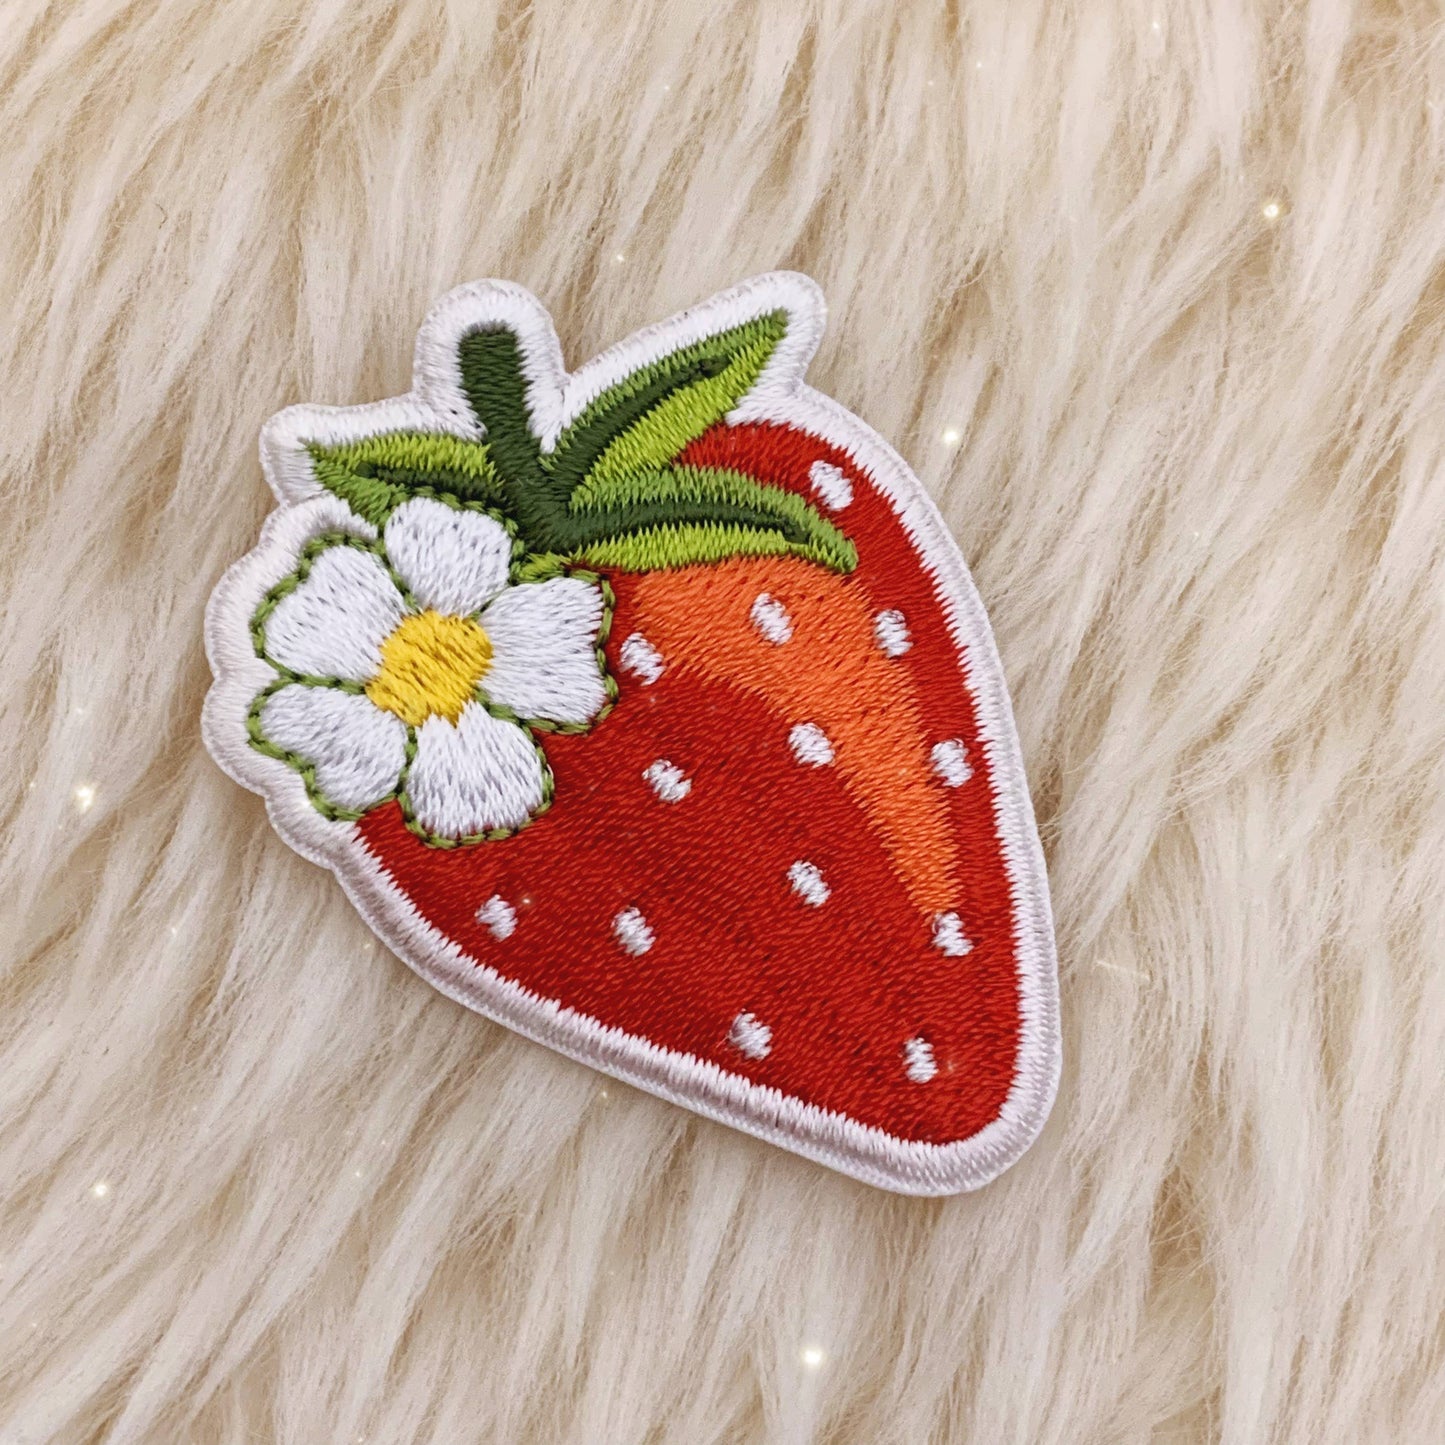 Strawberry Patch